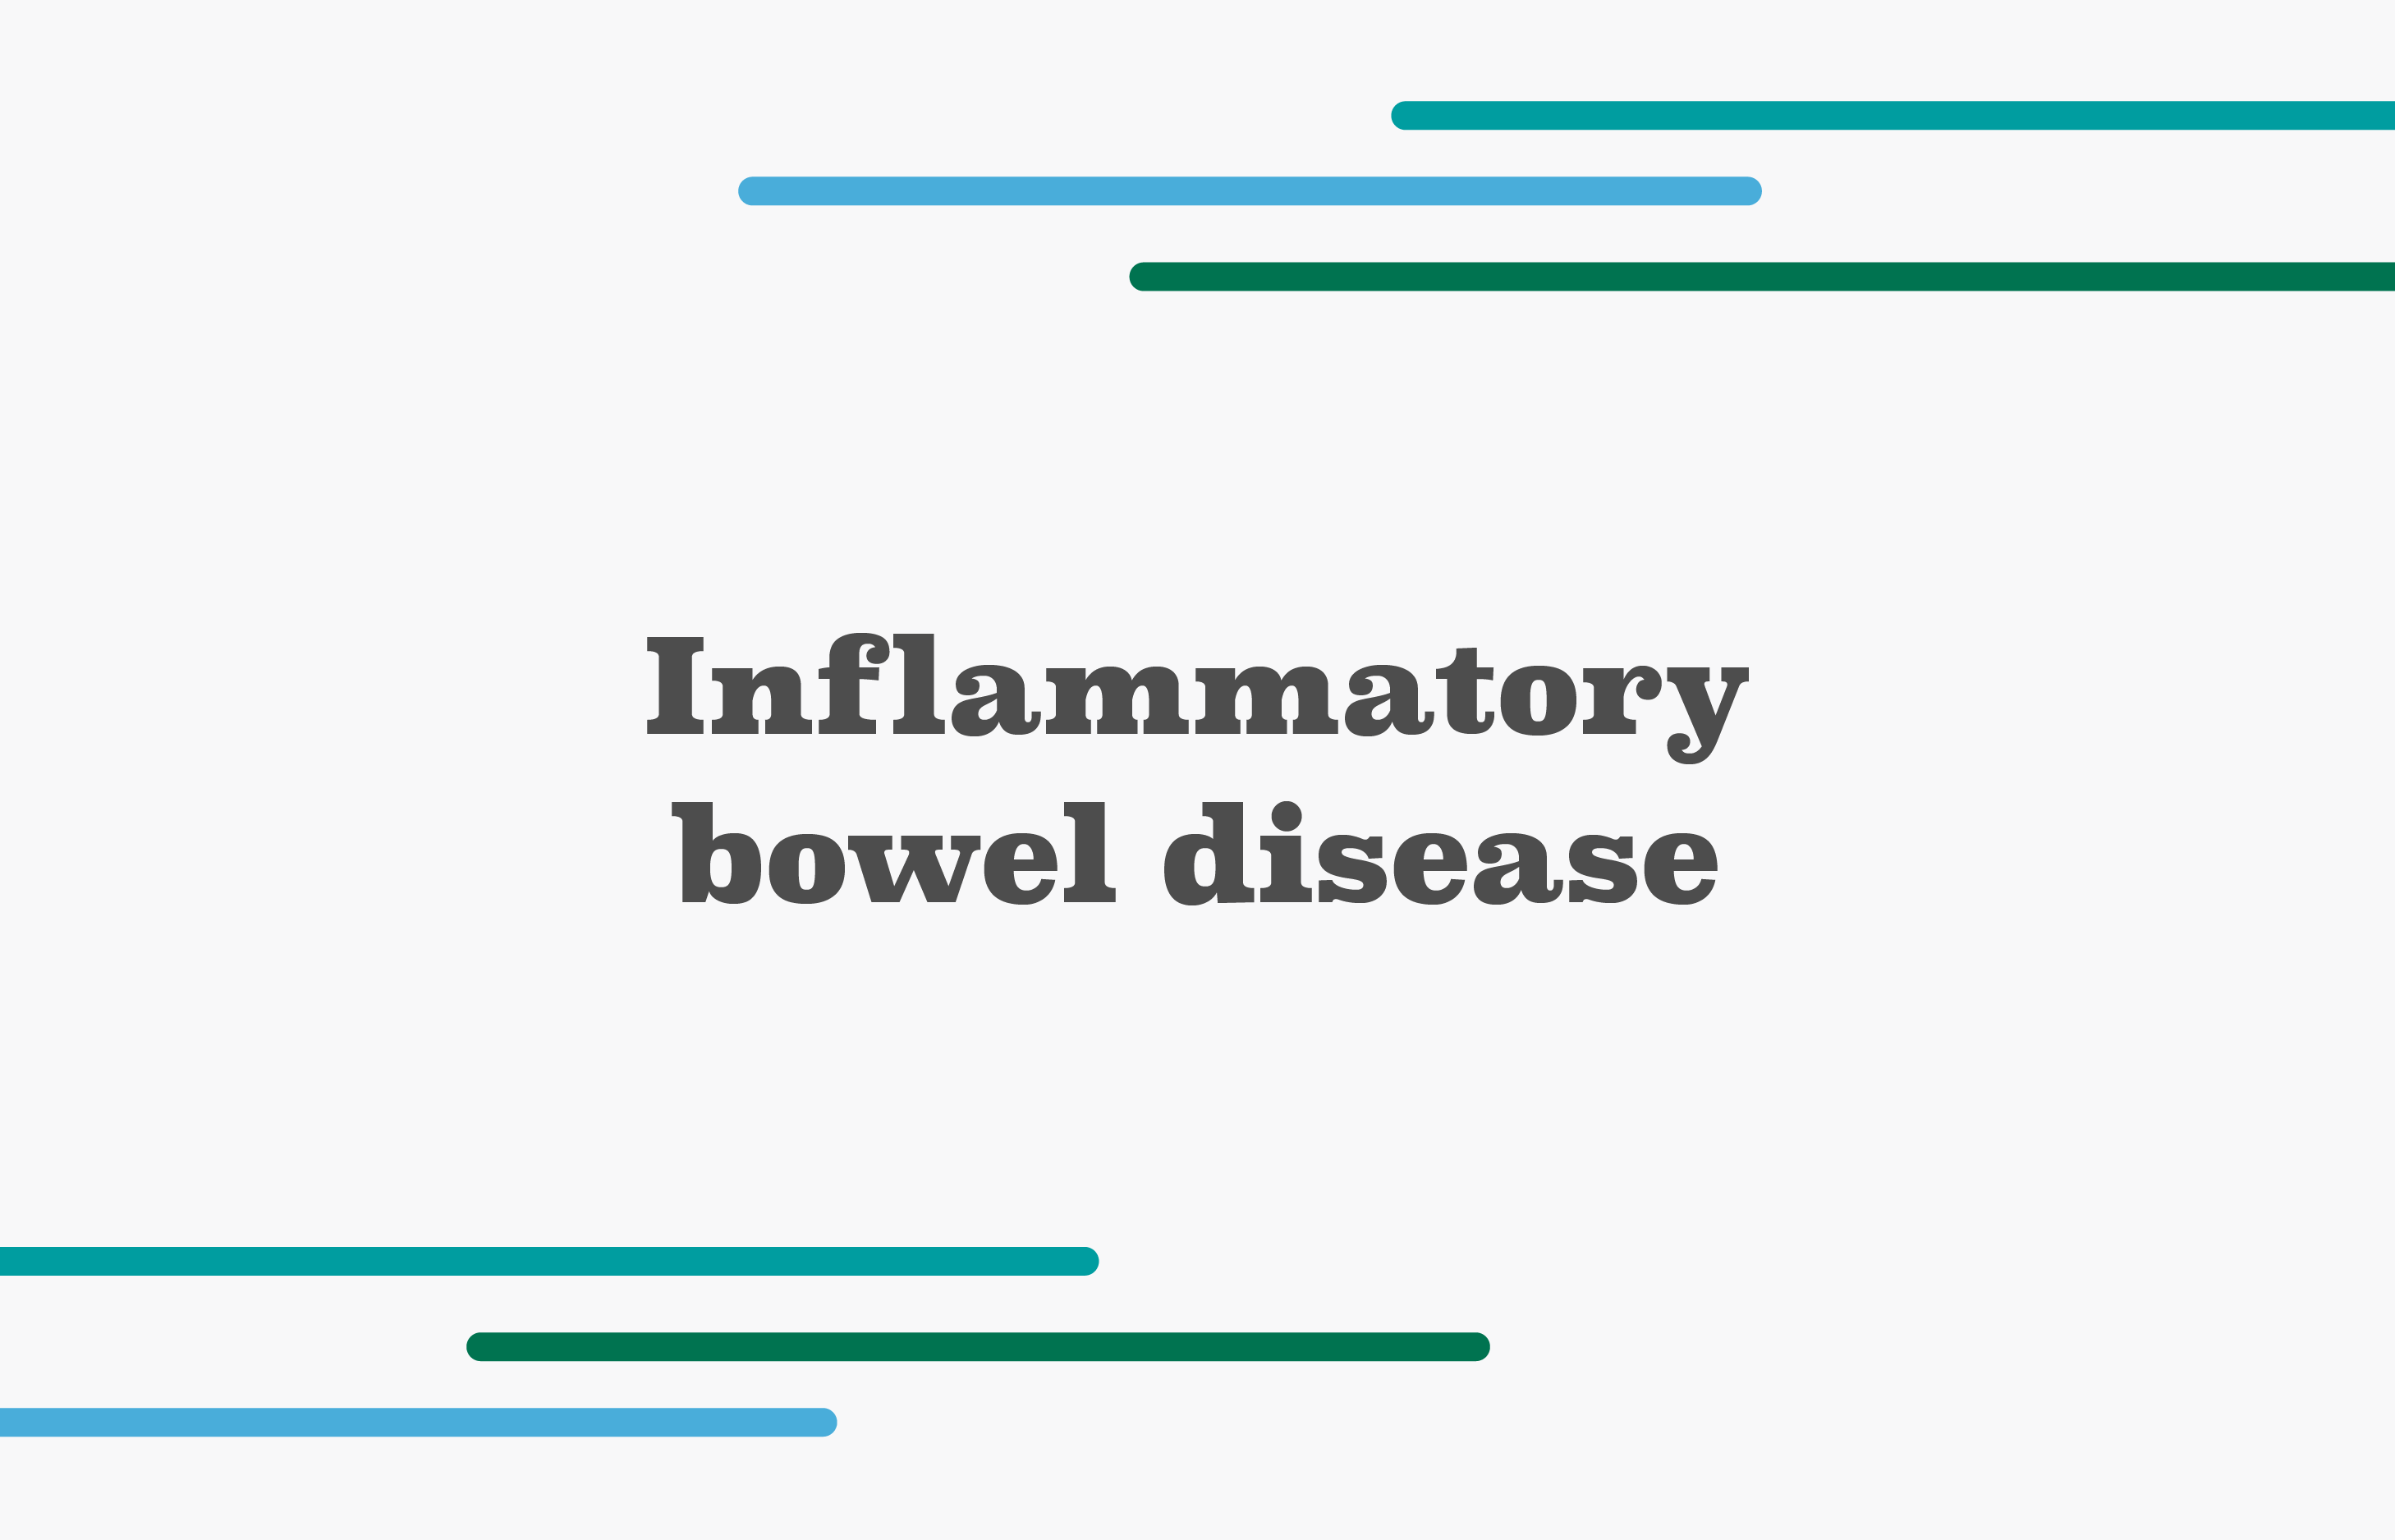 Inflammatory bowel disease